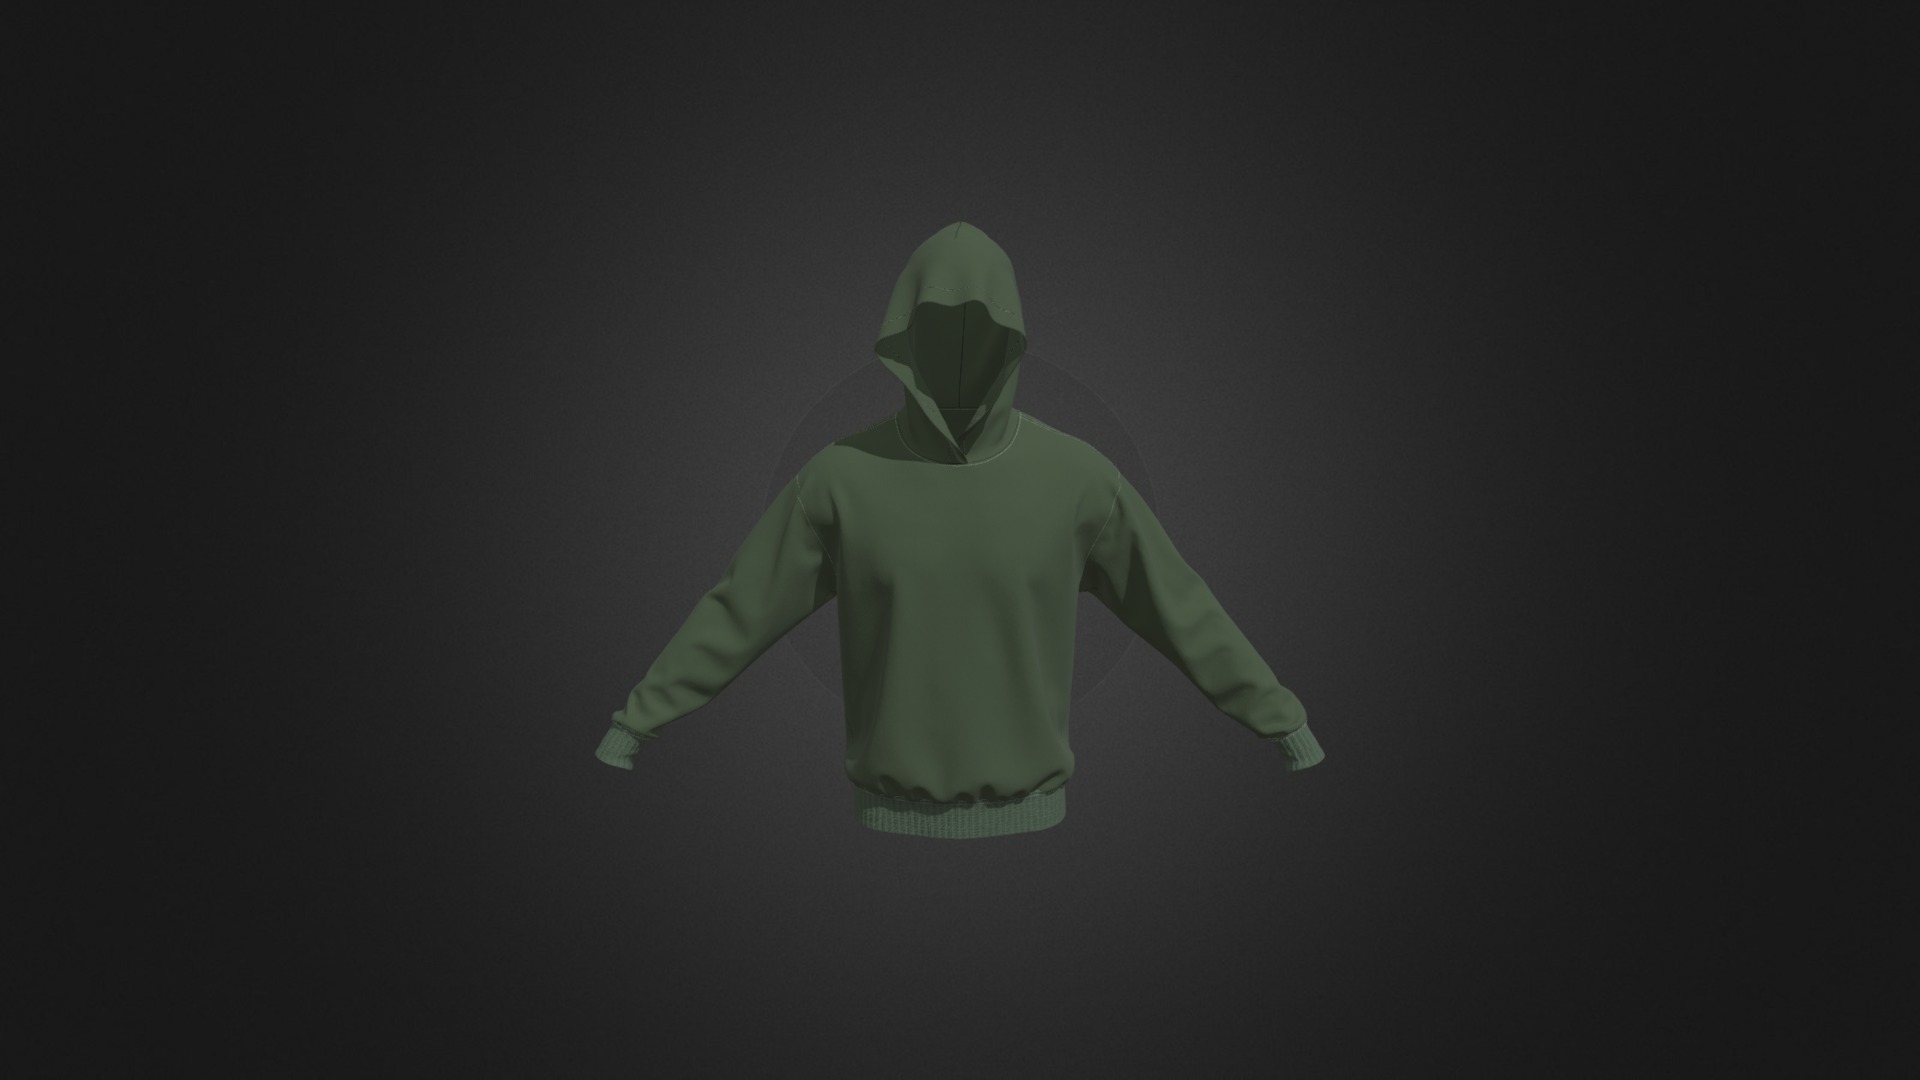 3D model Men’s Hood (Green) - This is a 3D model of the Men's Hood (Green). The 3D model is about a green alien figure.